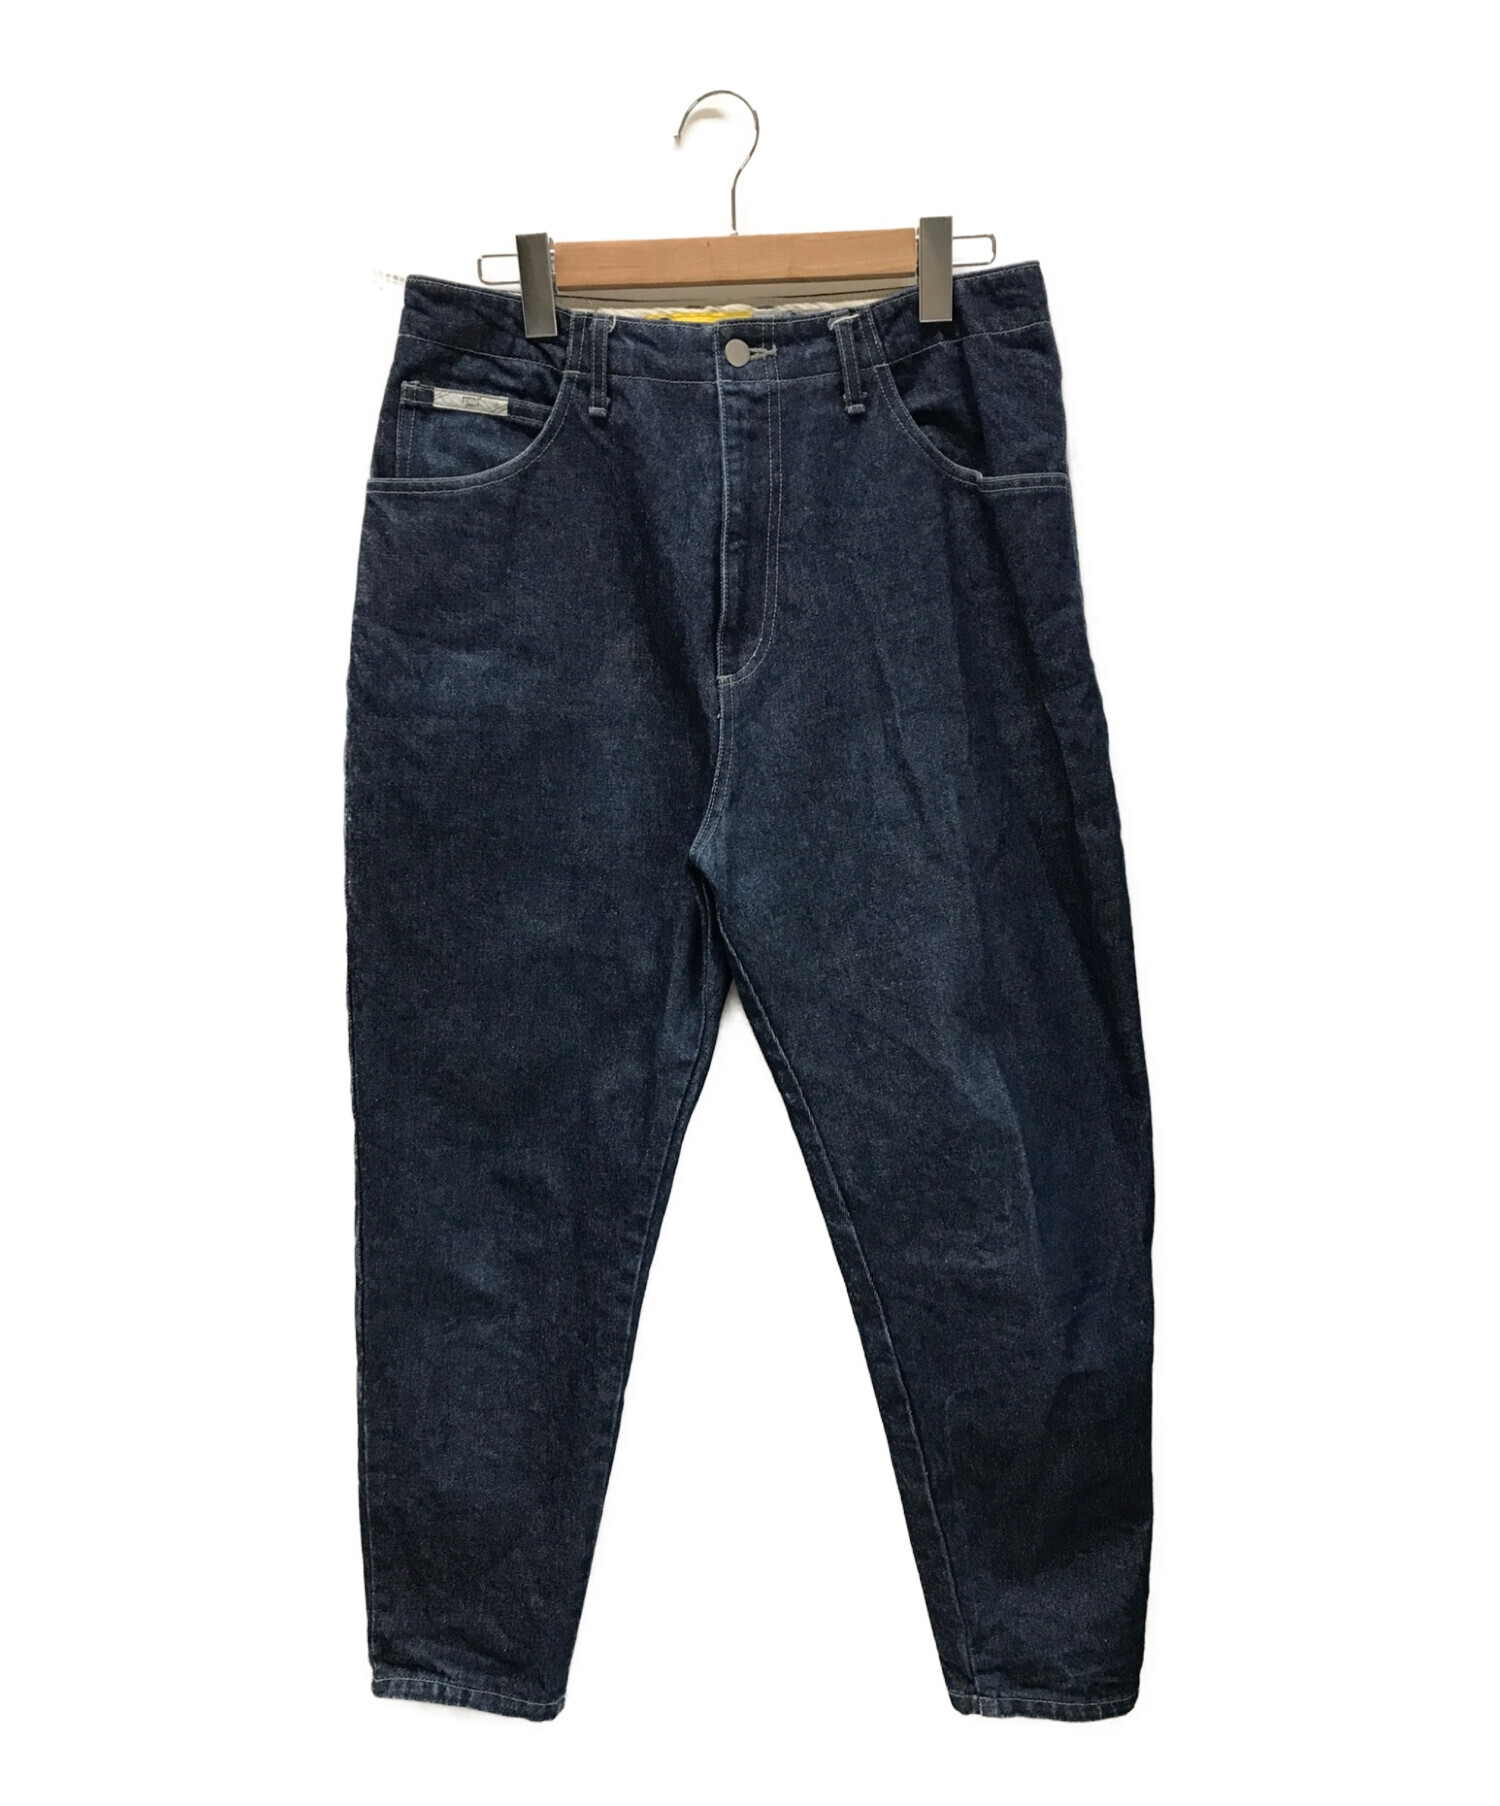 gourmet jeans lean type3 サイズ32